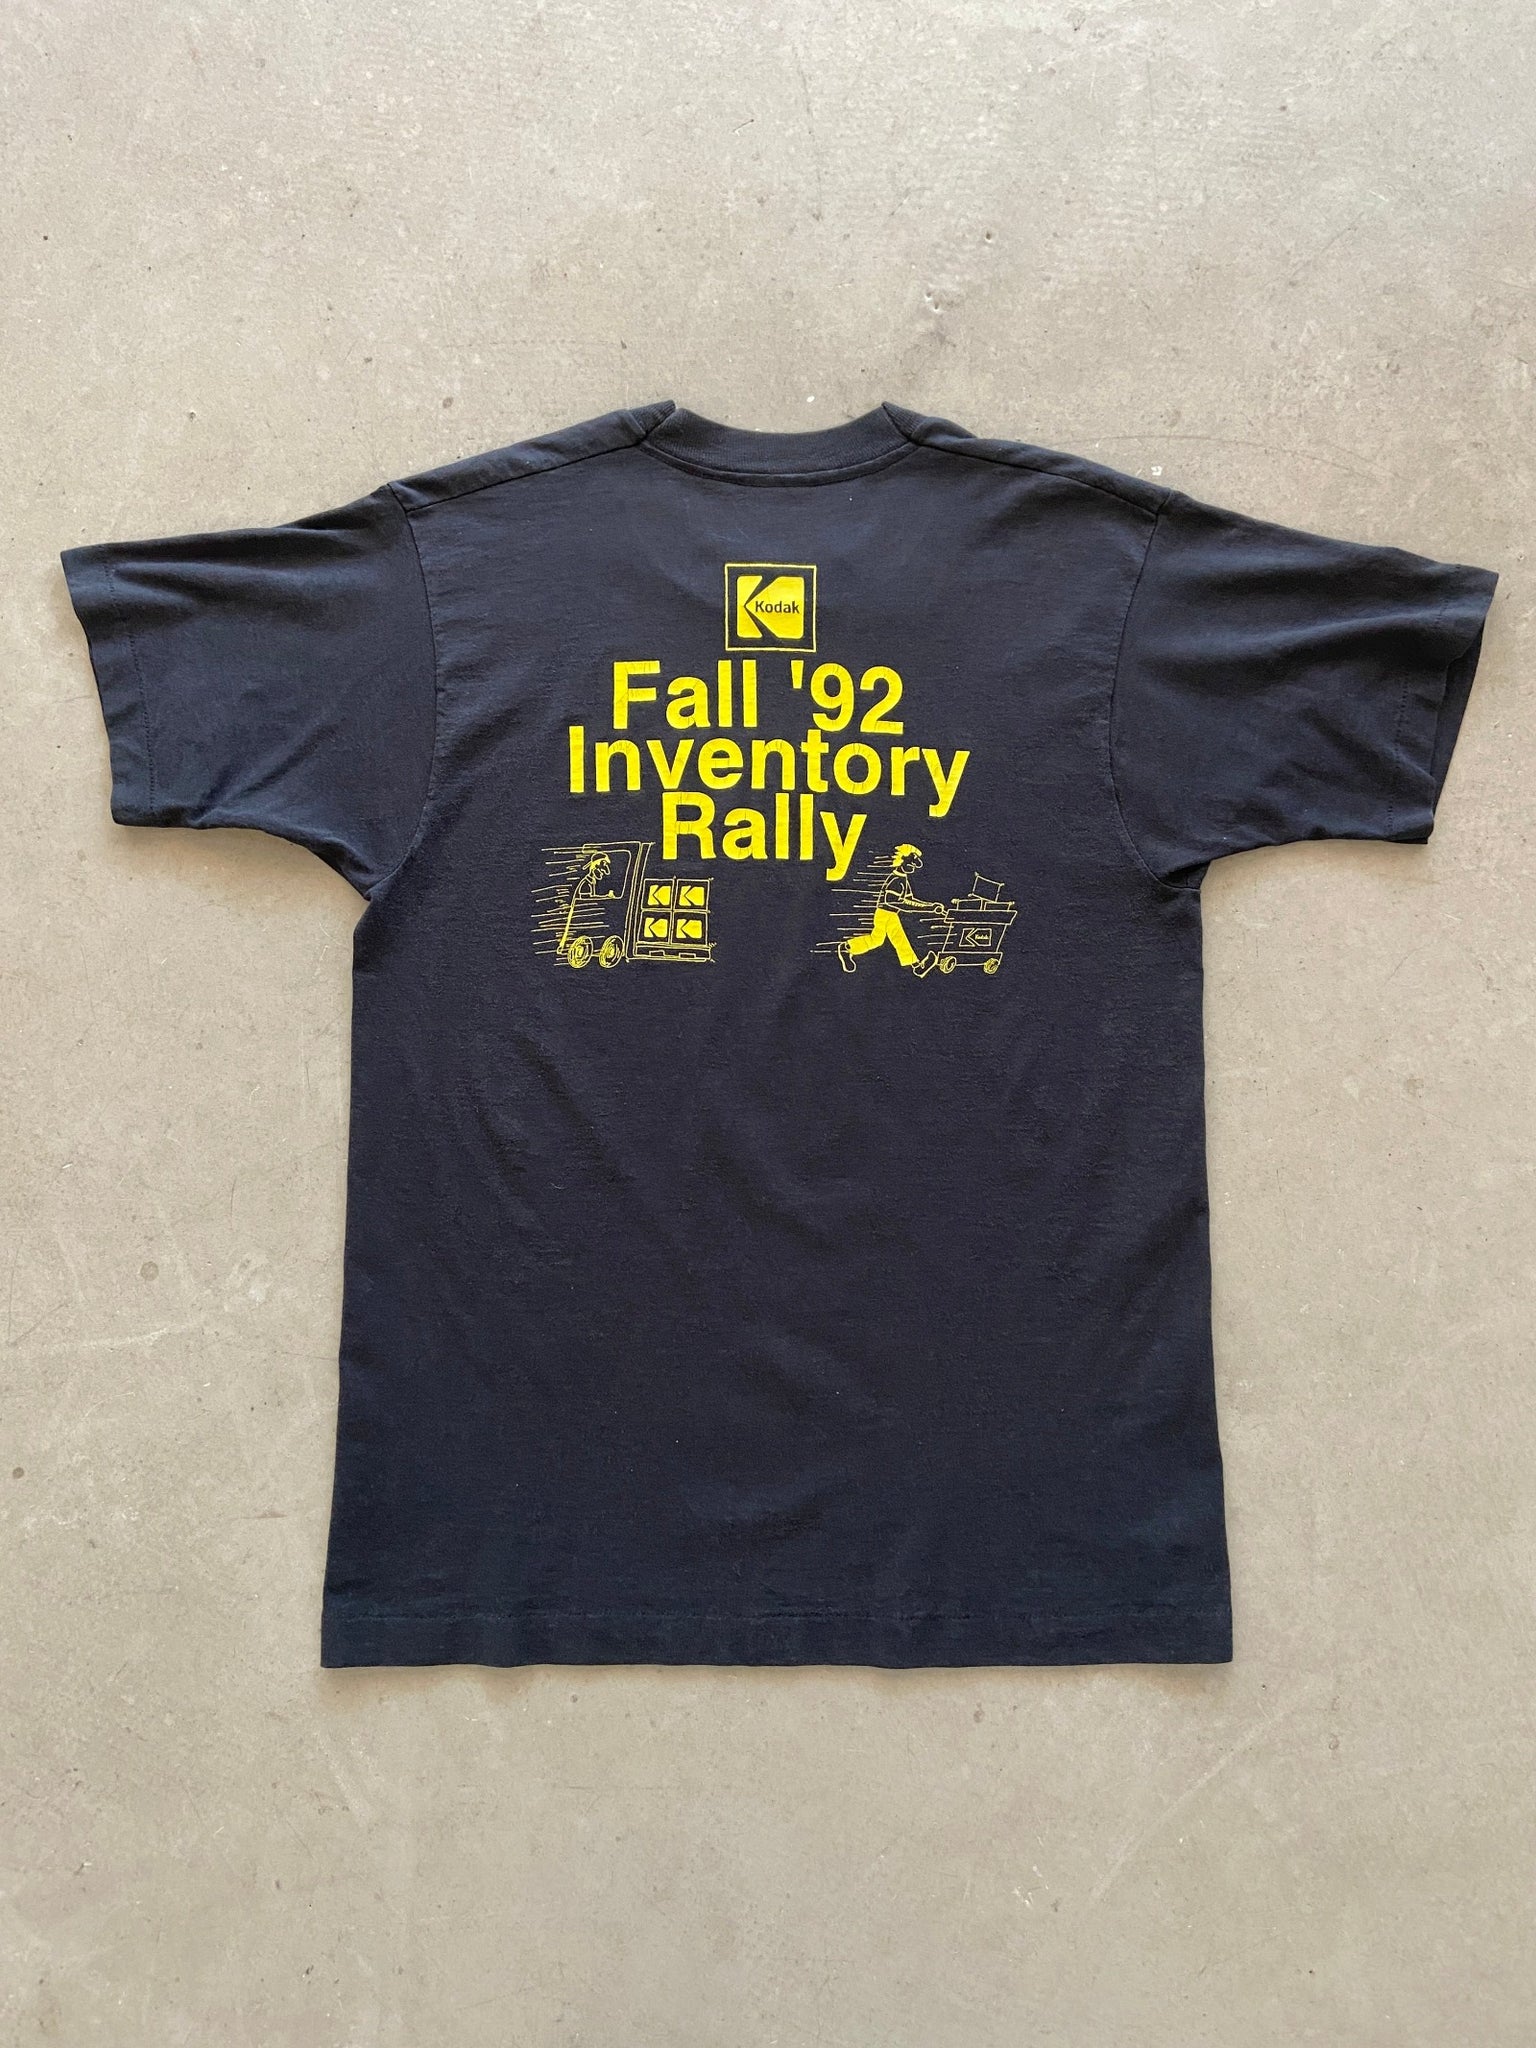 1992 Kodak Inventory Rally T-Shirt - L